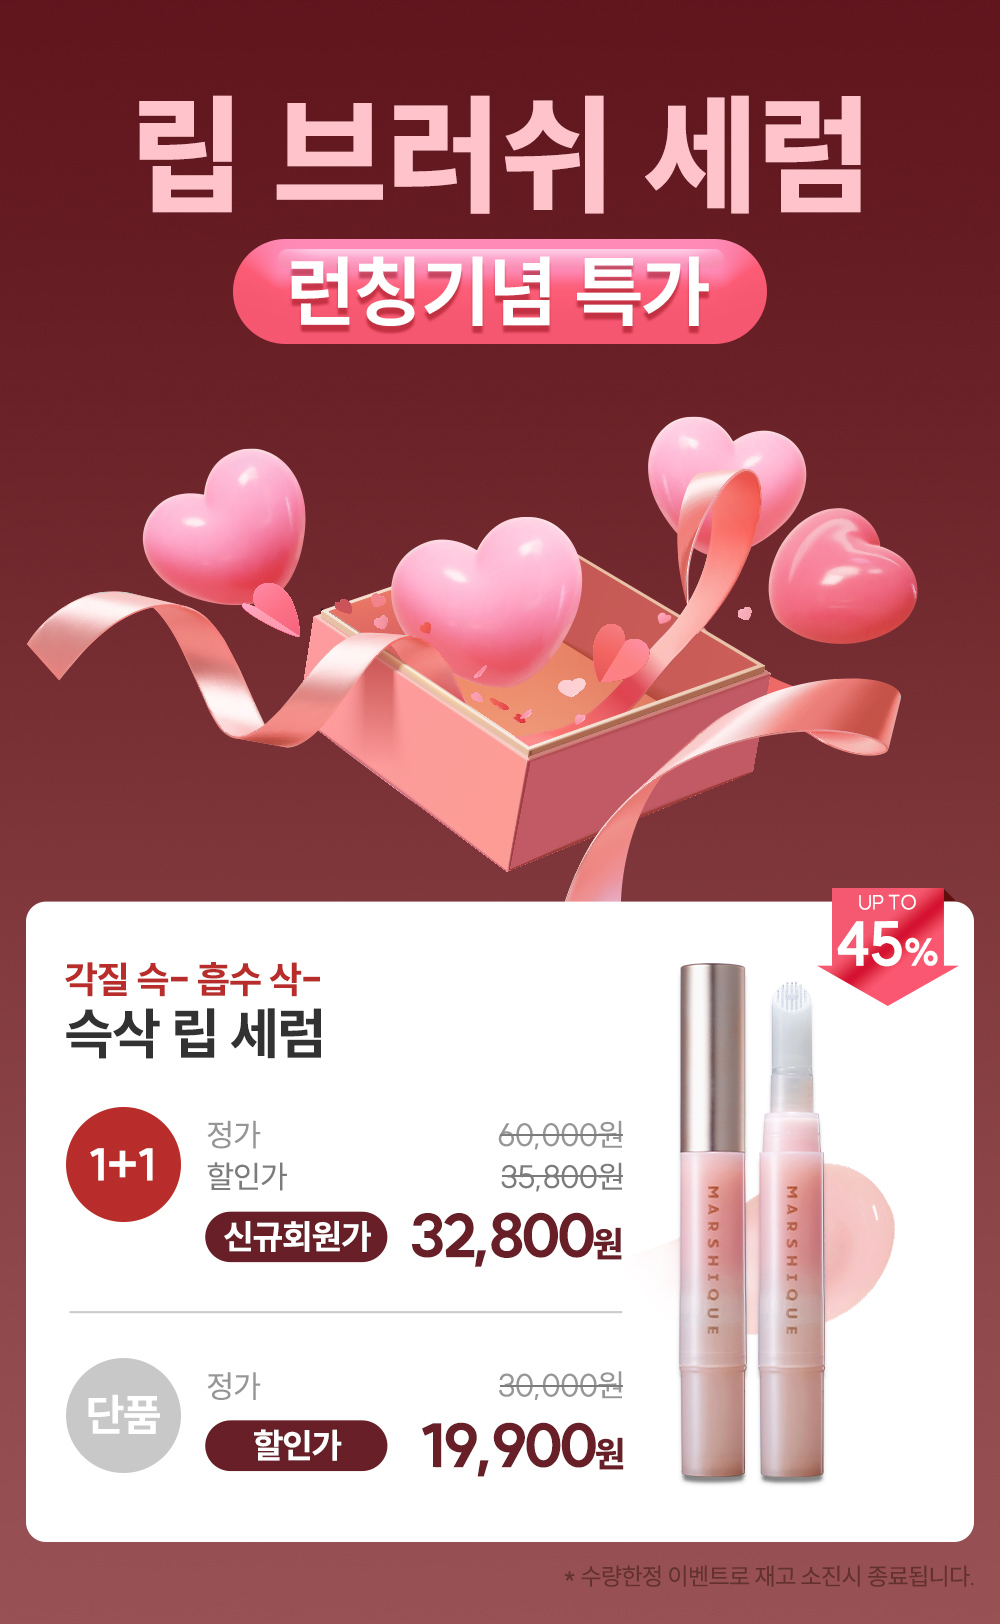 cosmetics product image-S204L1